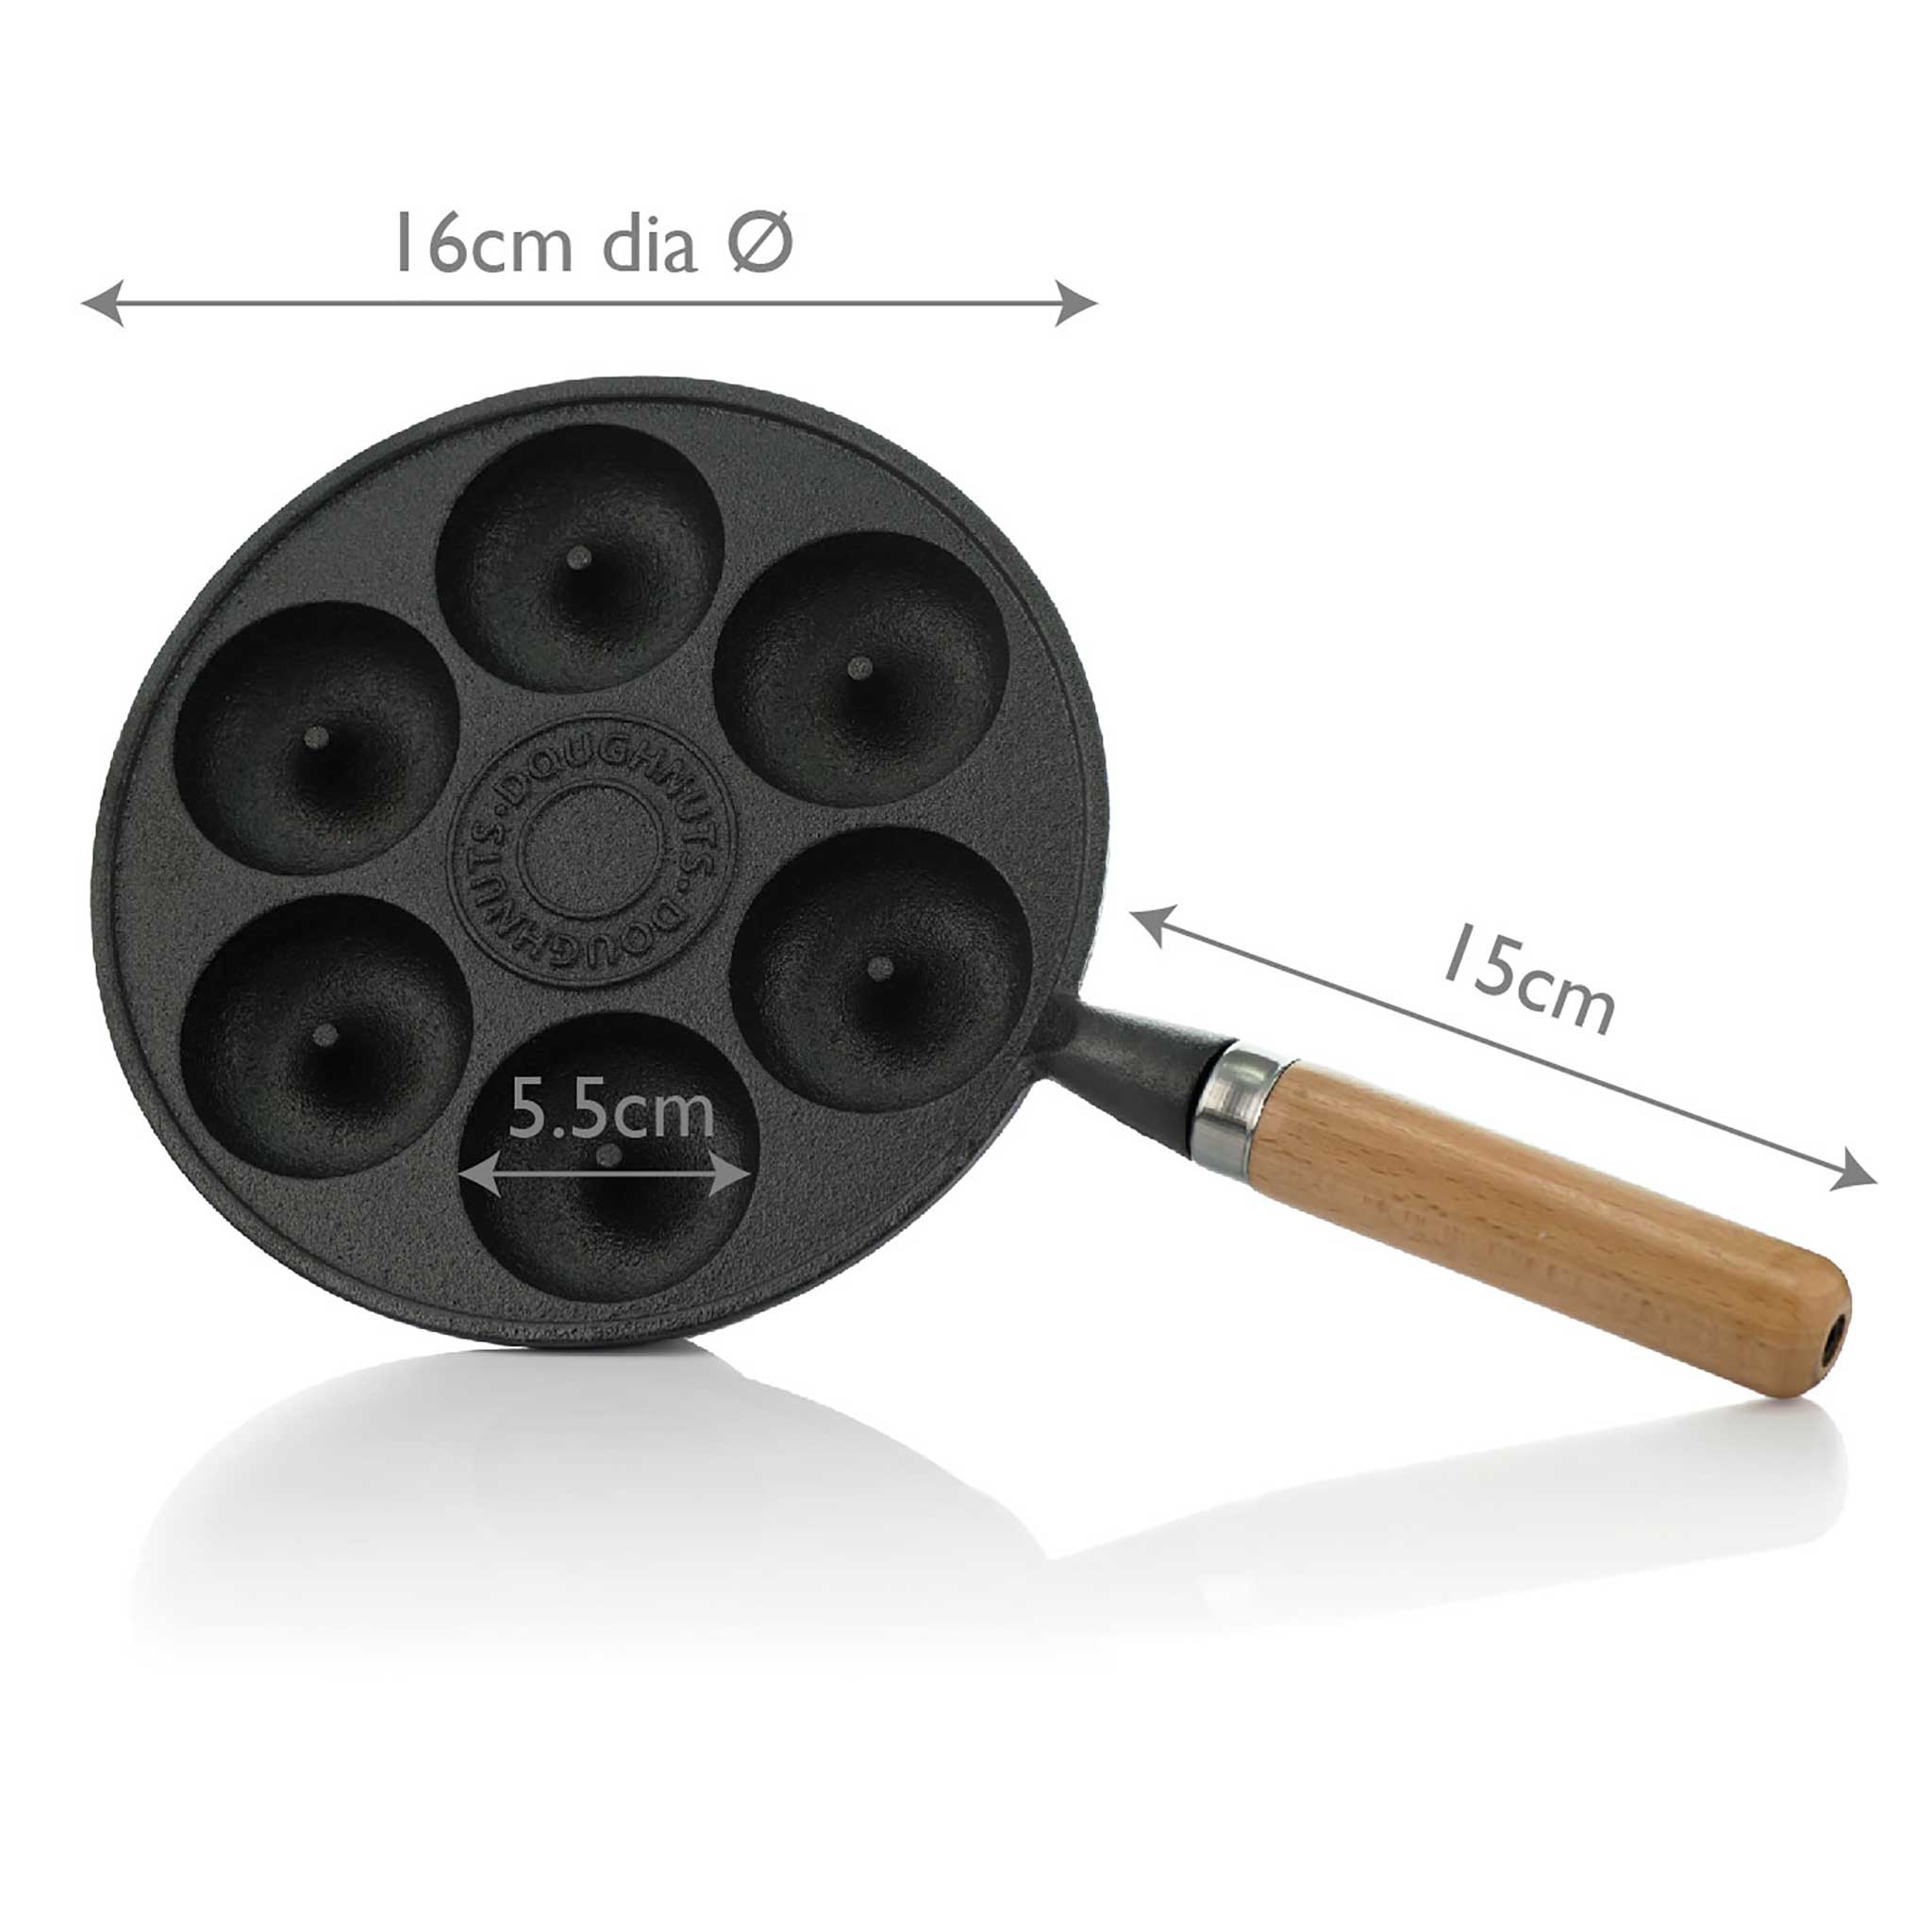 Cast iron donut pan with dimensions 16cm x 5.5cm x 15cm